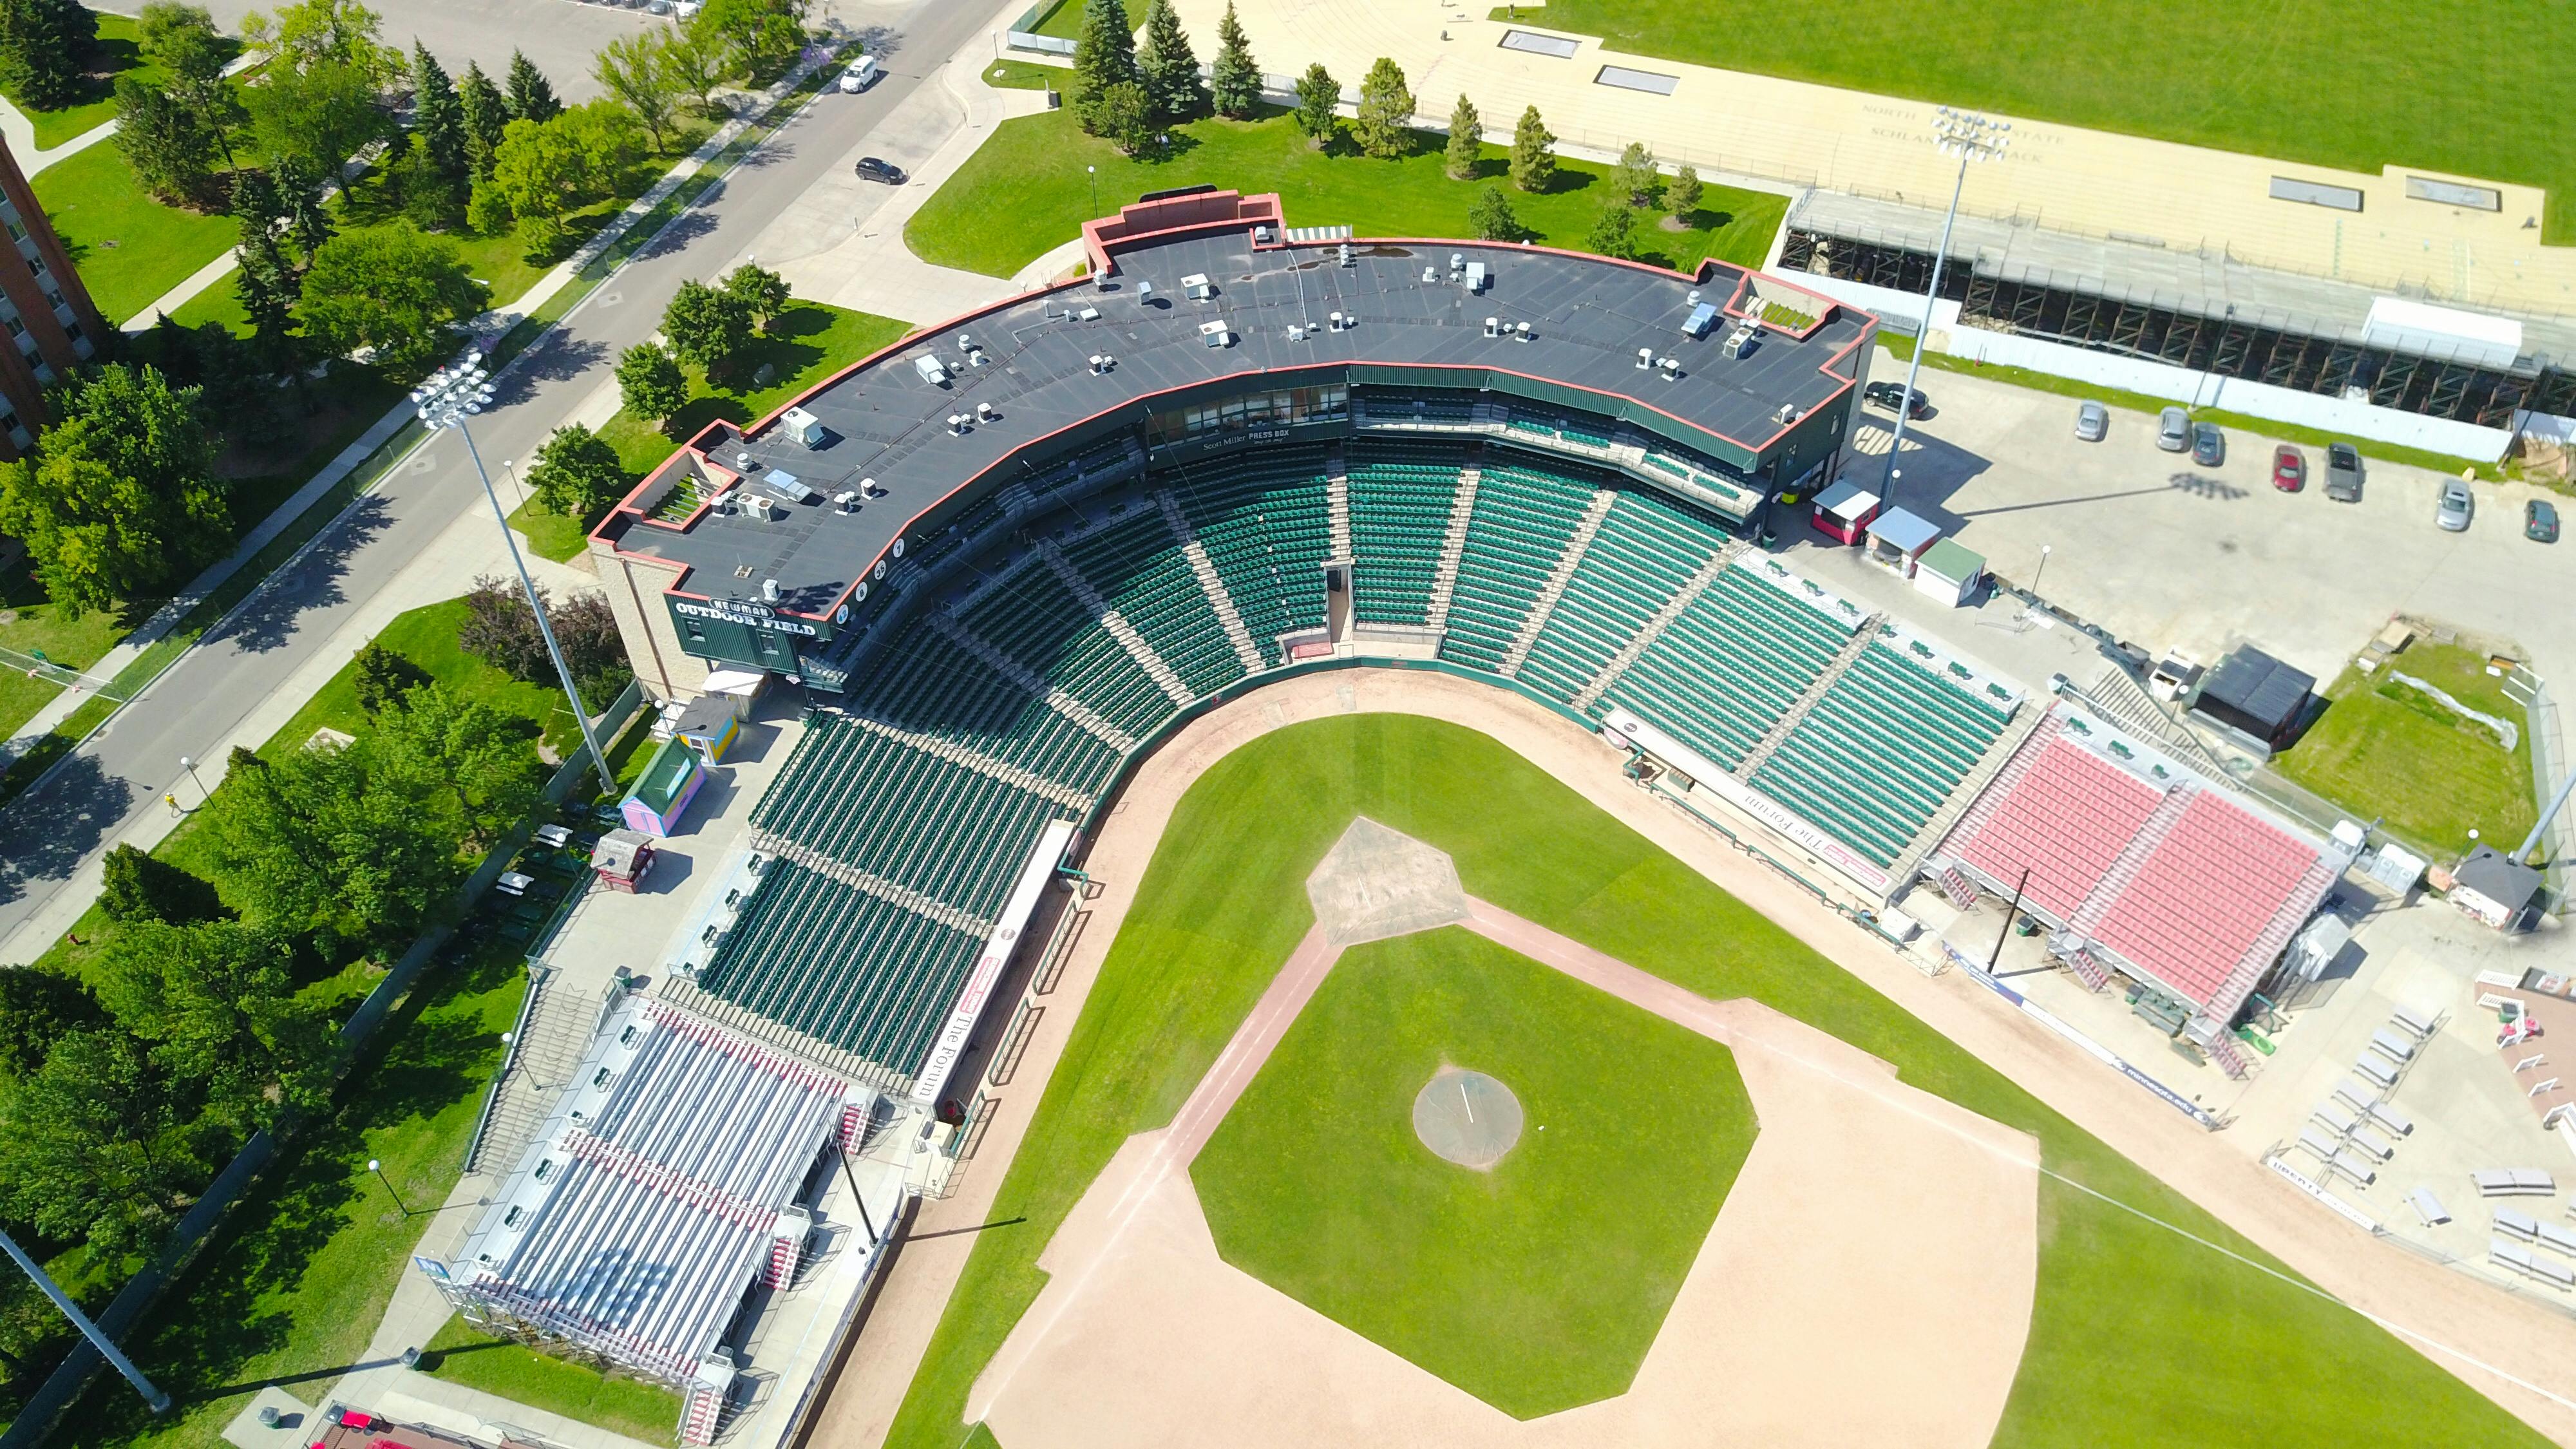 Aerial Photo of Stadium · Free Stock Photo